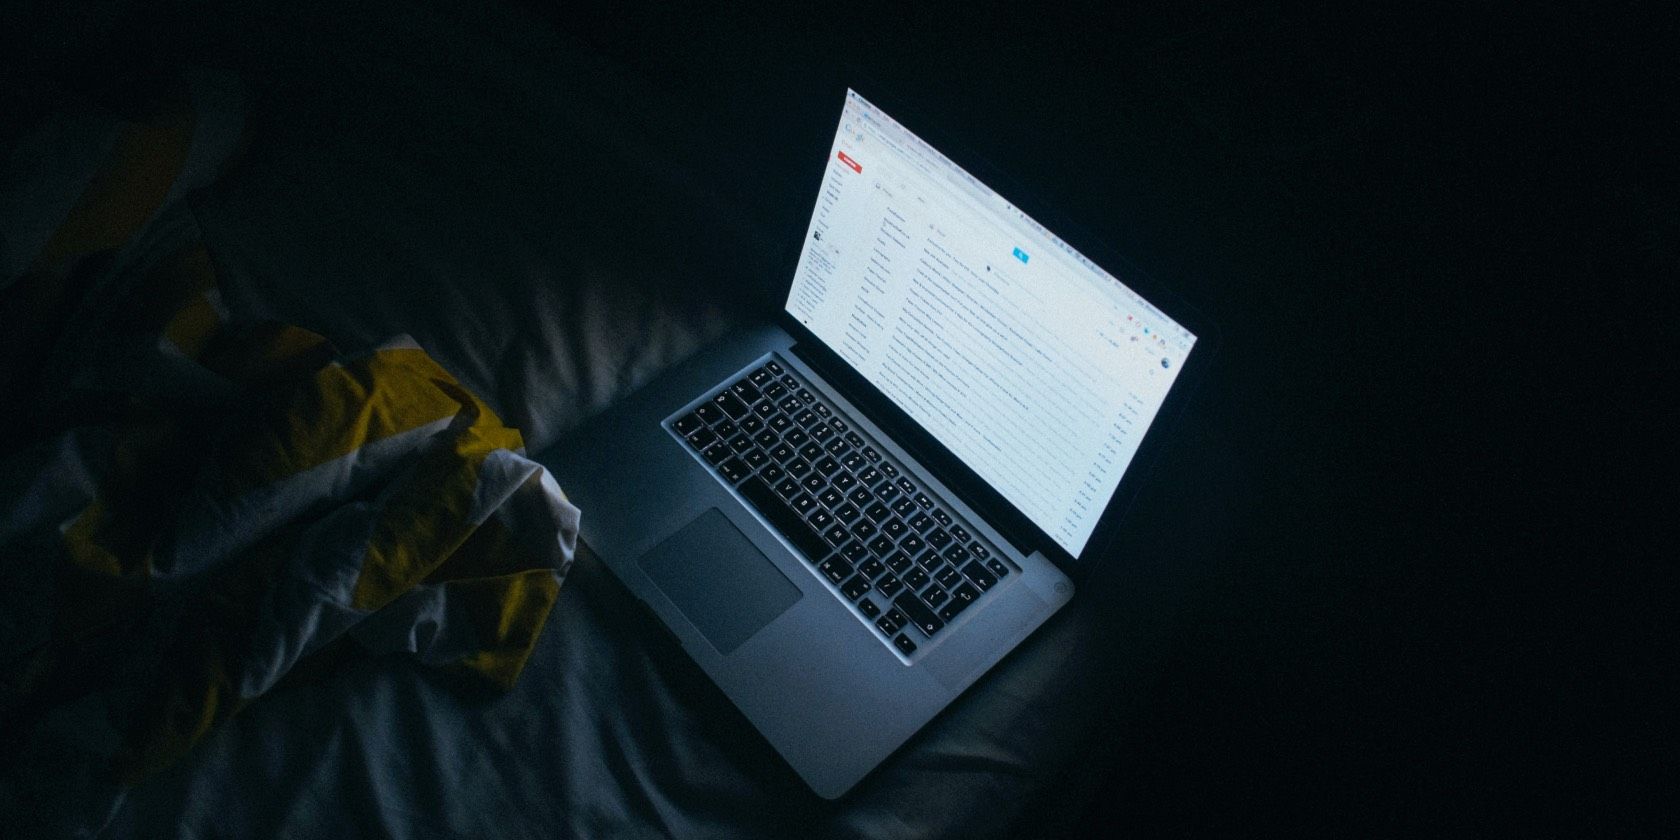 Gmail on Laptop in the Dark